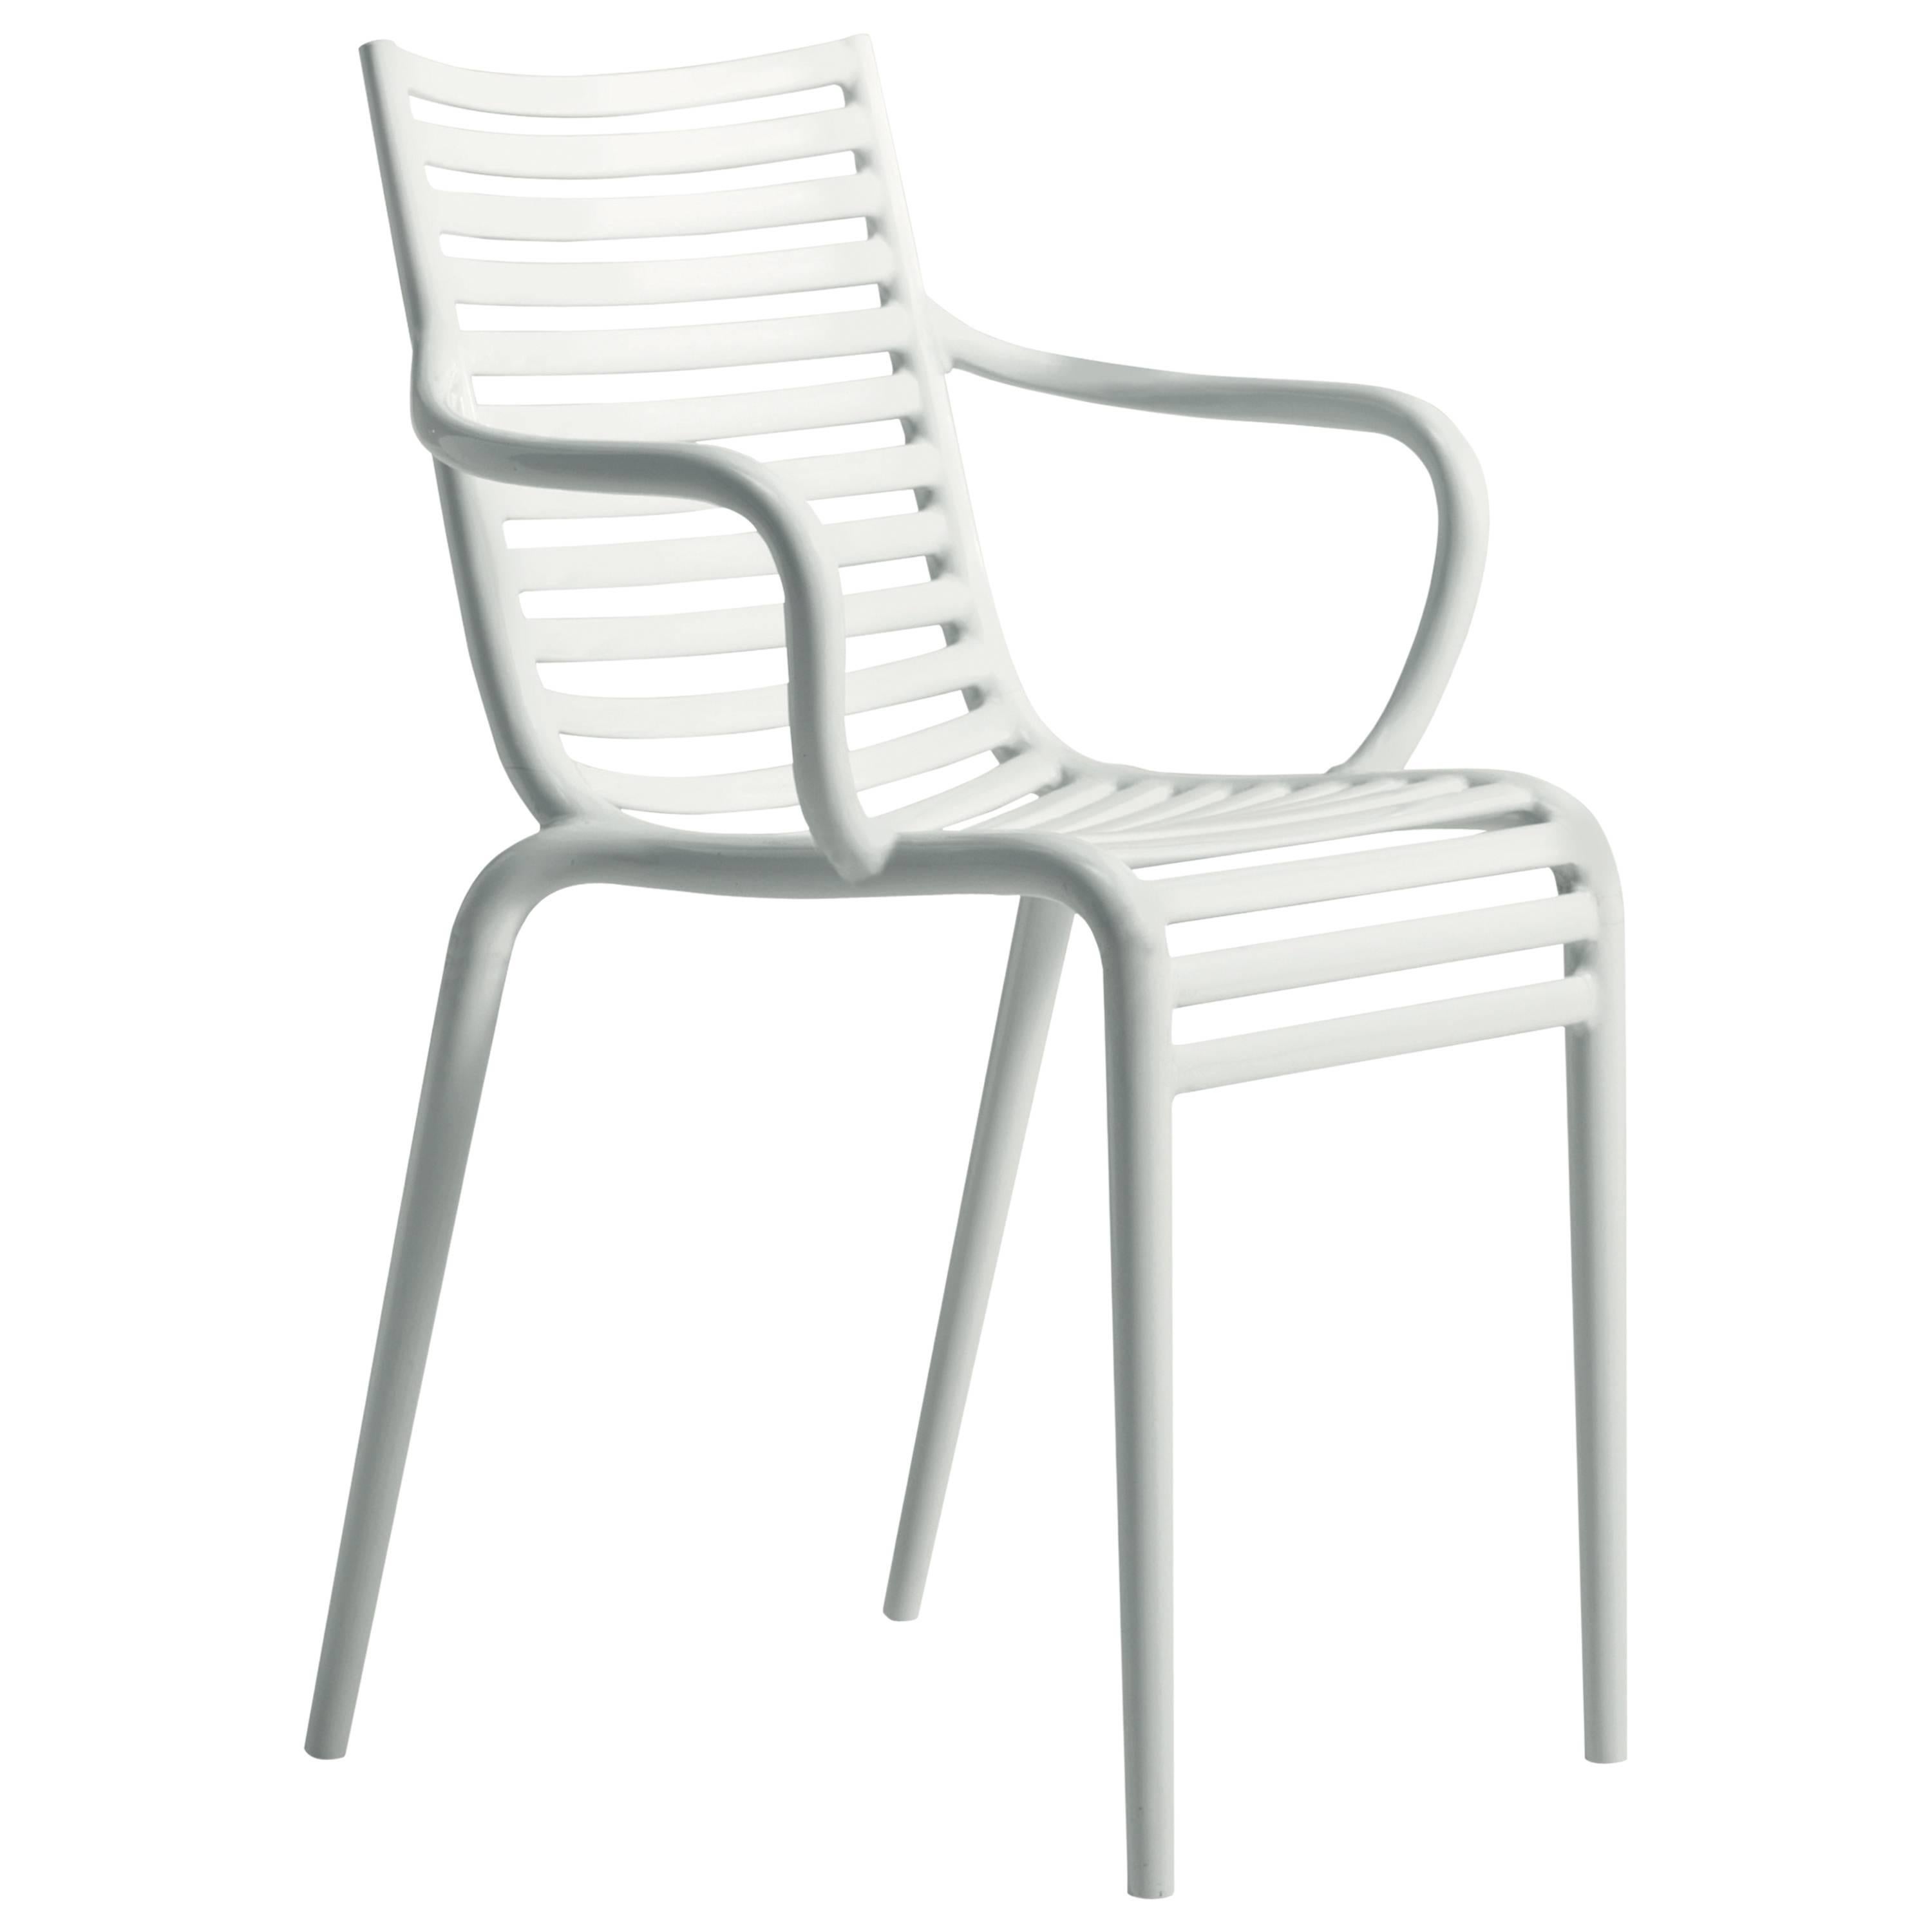 „PIP-e“ Farbiger stapelbarer Sessel „PIP-e“, entworfen von Philippe Starck für Driade